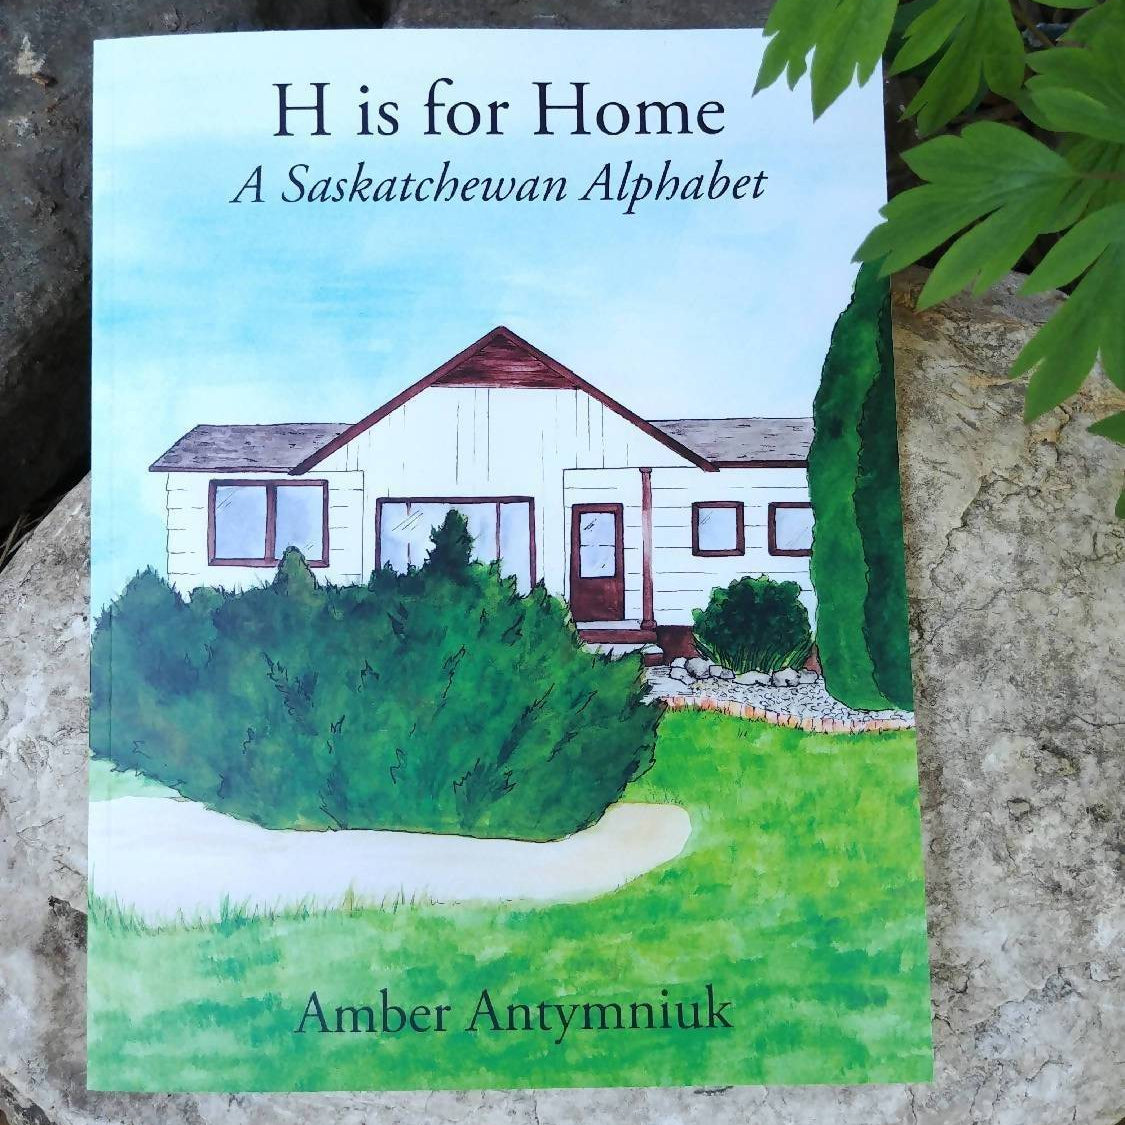 H Is For Home: A Saskatchewan Alphabet